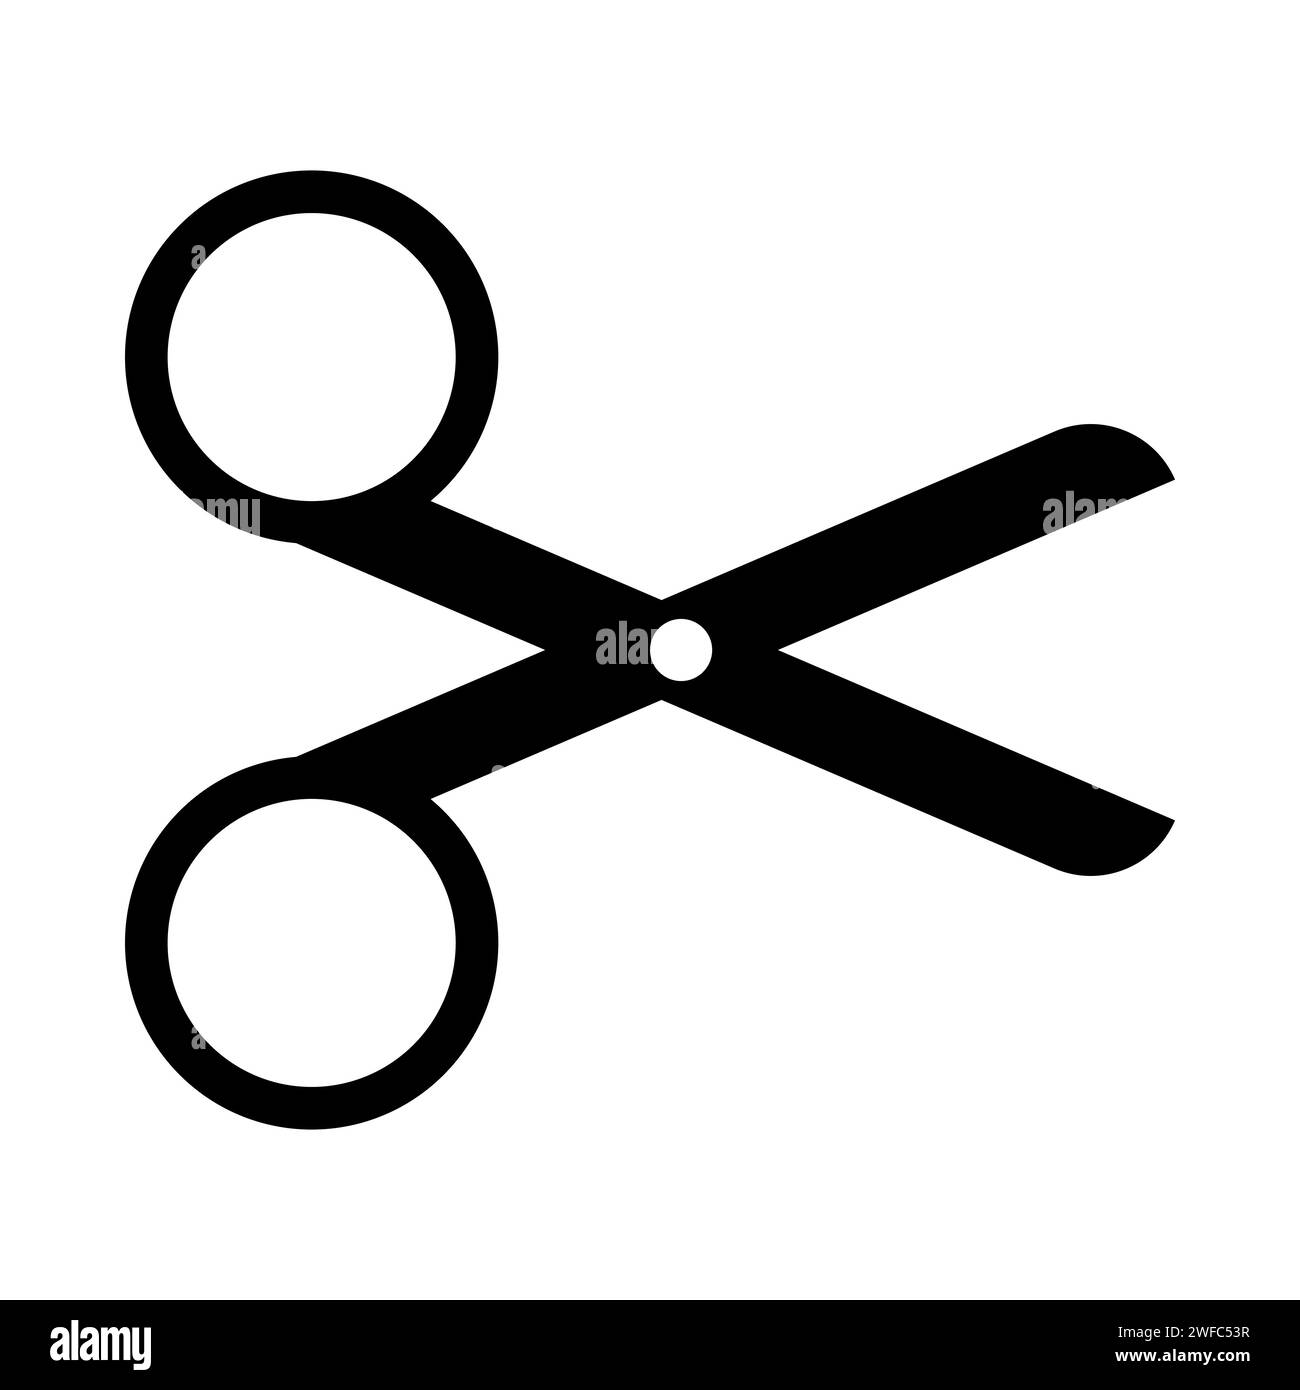 Scissors icon. Black silhouette. Barber logotype. Paper cut. Line work. Style concept. Vector illustration. Stock image. EPS 10. Stock Vector